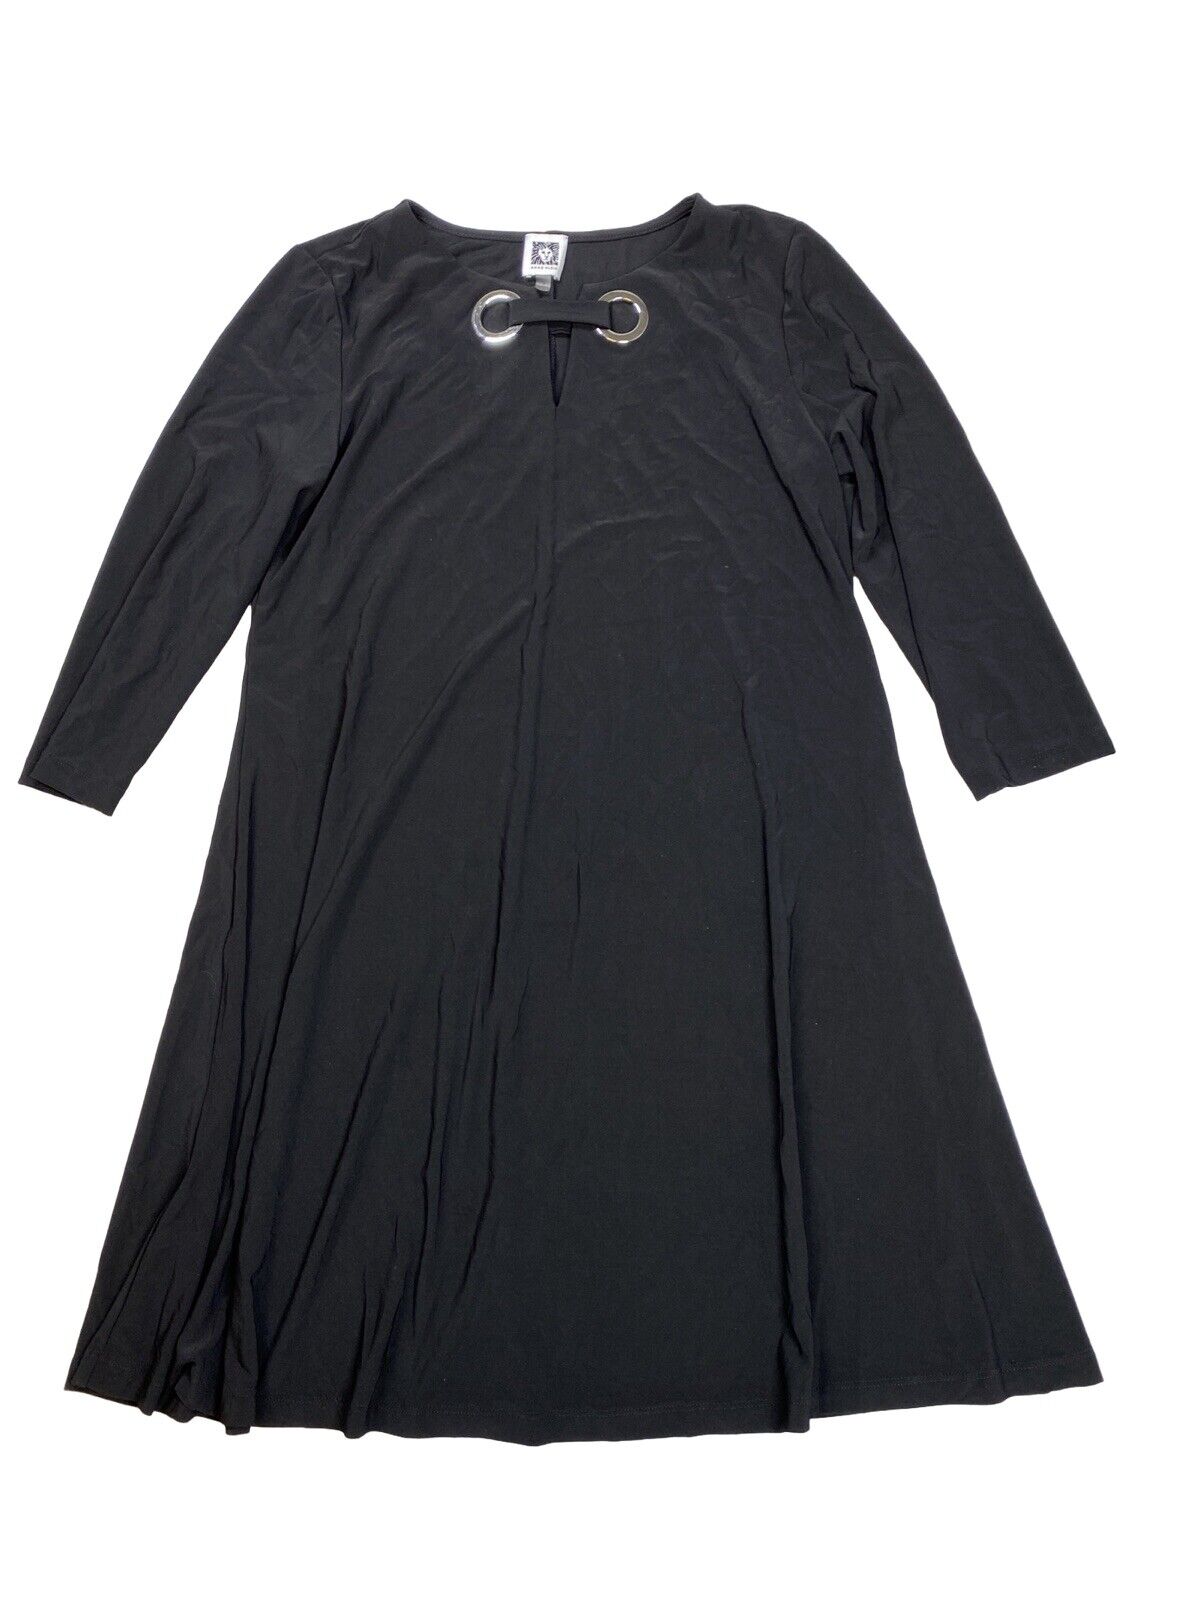 Anne Klein Women's Black 3/4 Sleeve Knee Length Shift Dress - 4